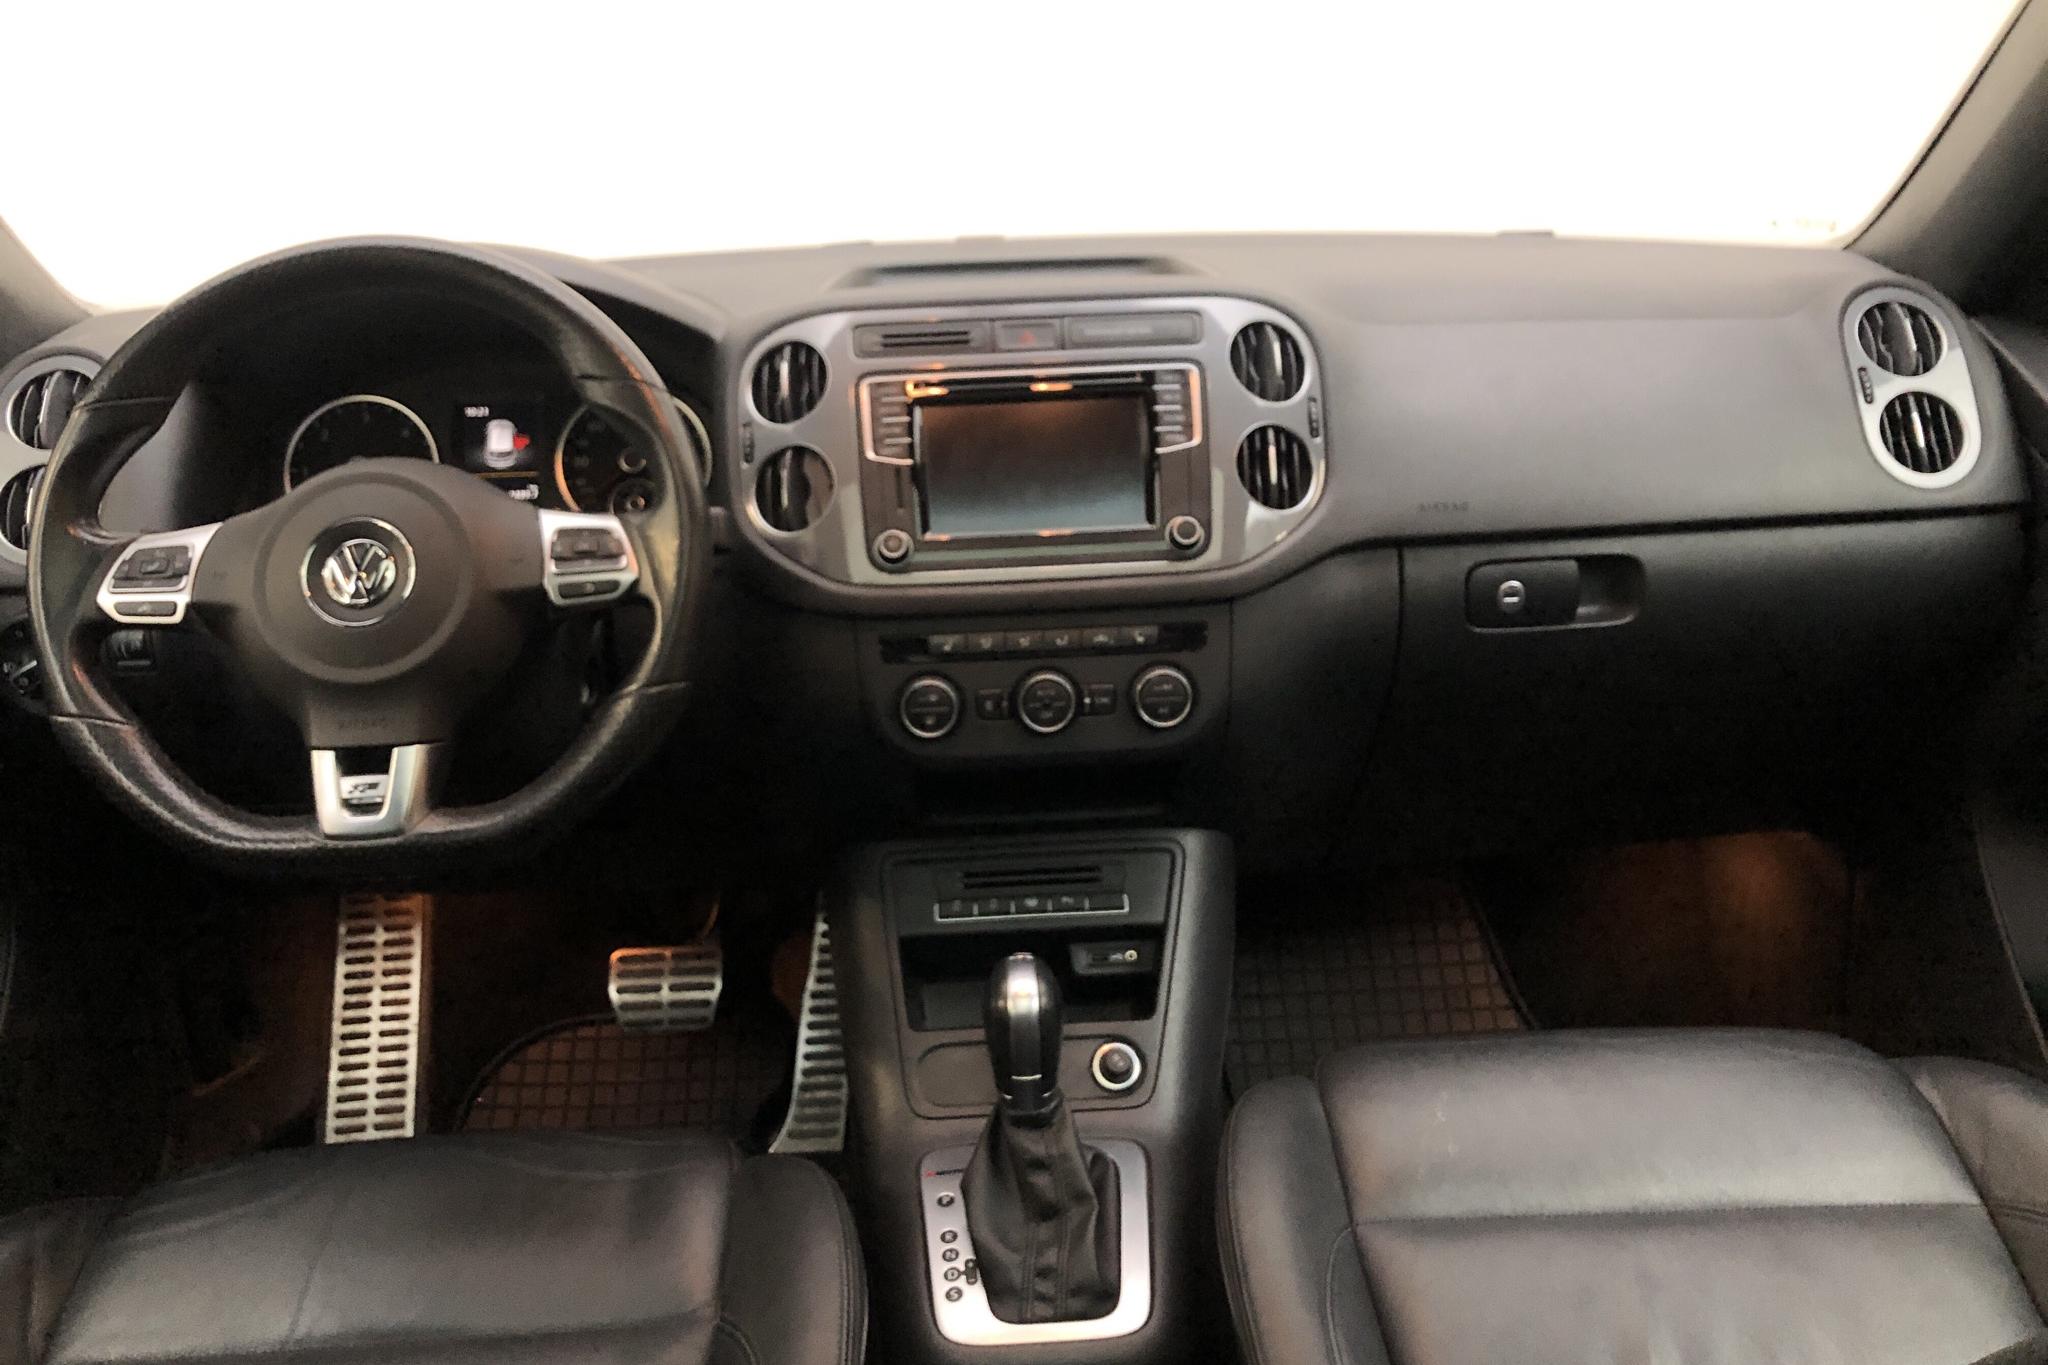 VW Tiguan 2.0 TDI 4MOTION BlueMotion Technology (184hk) - 132 980 km - Automaattinen - Light Brown - 2016